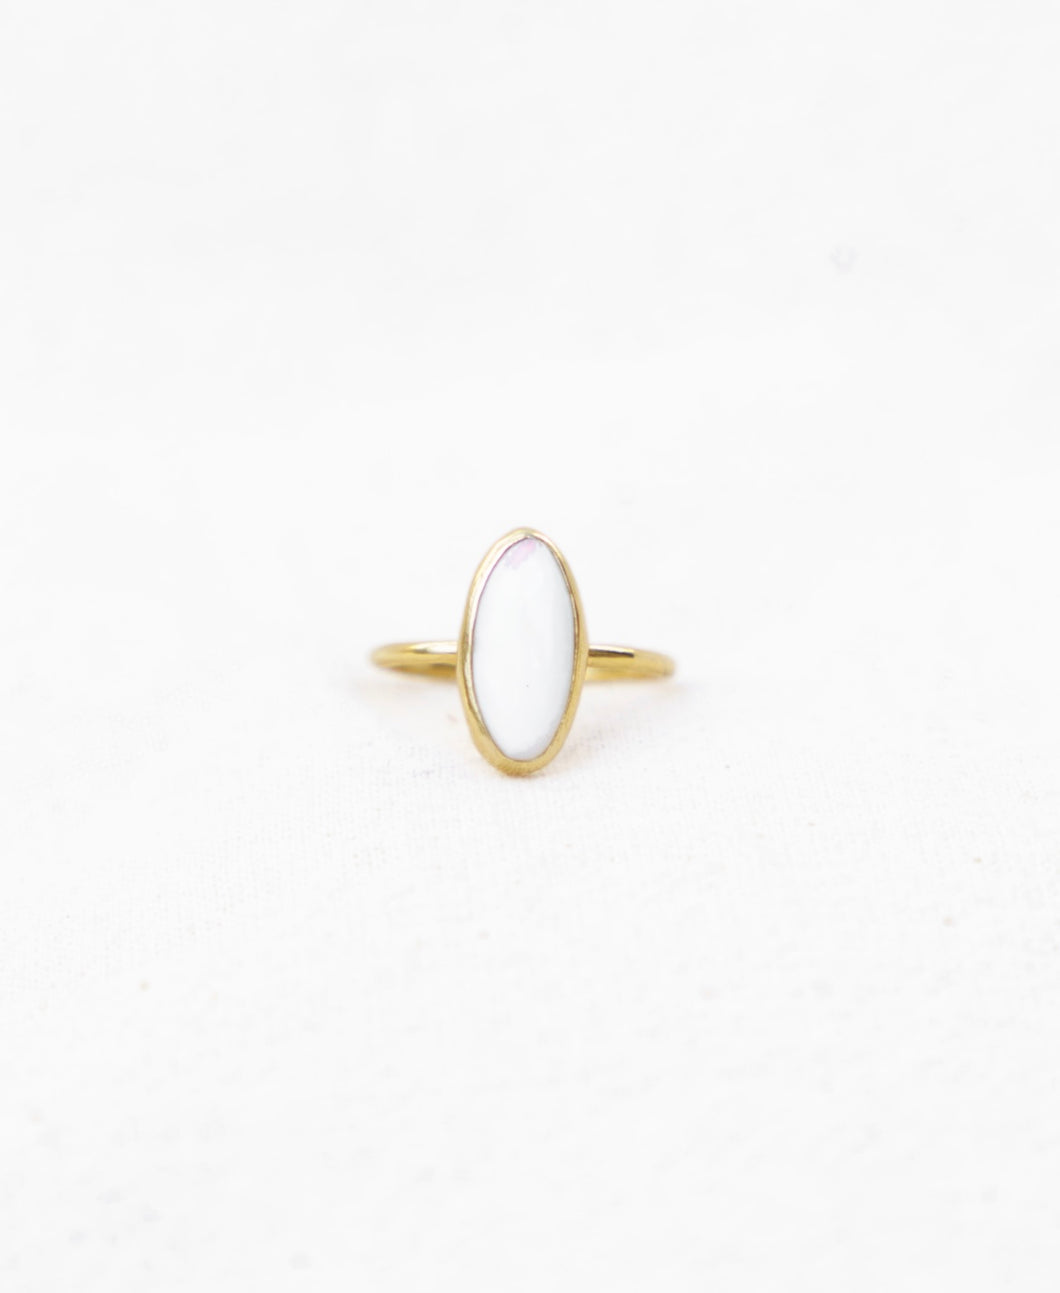 White Opal Ring, Gold Vermeil - Size N